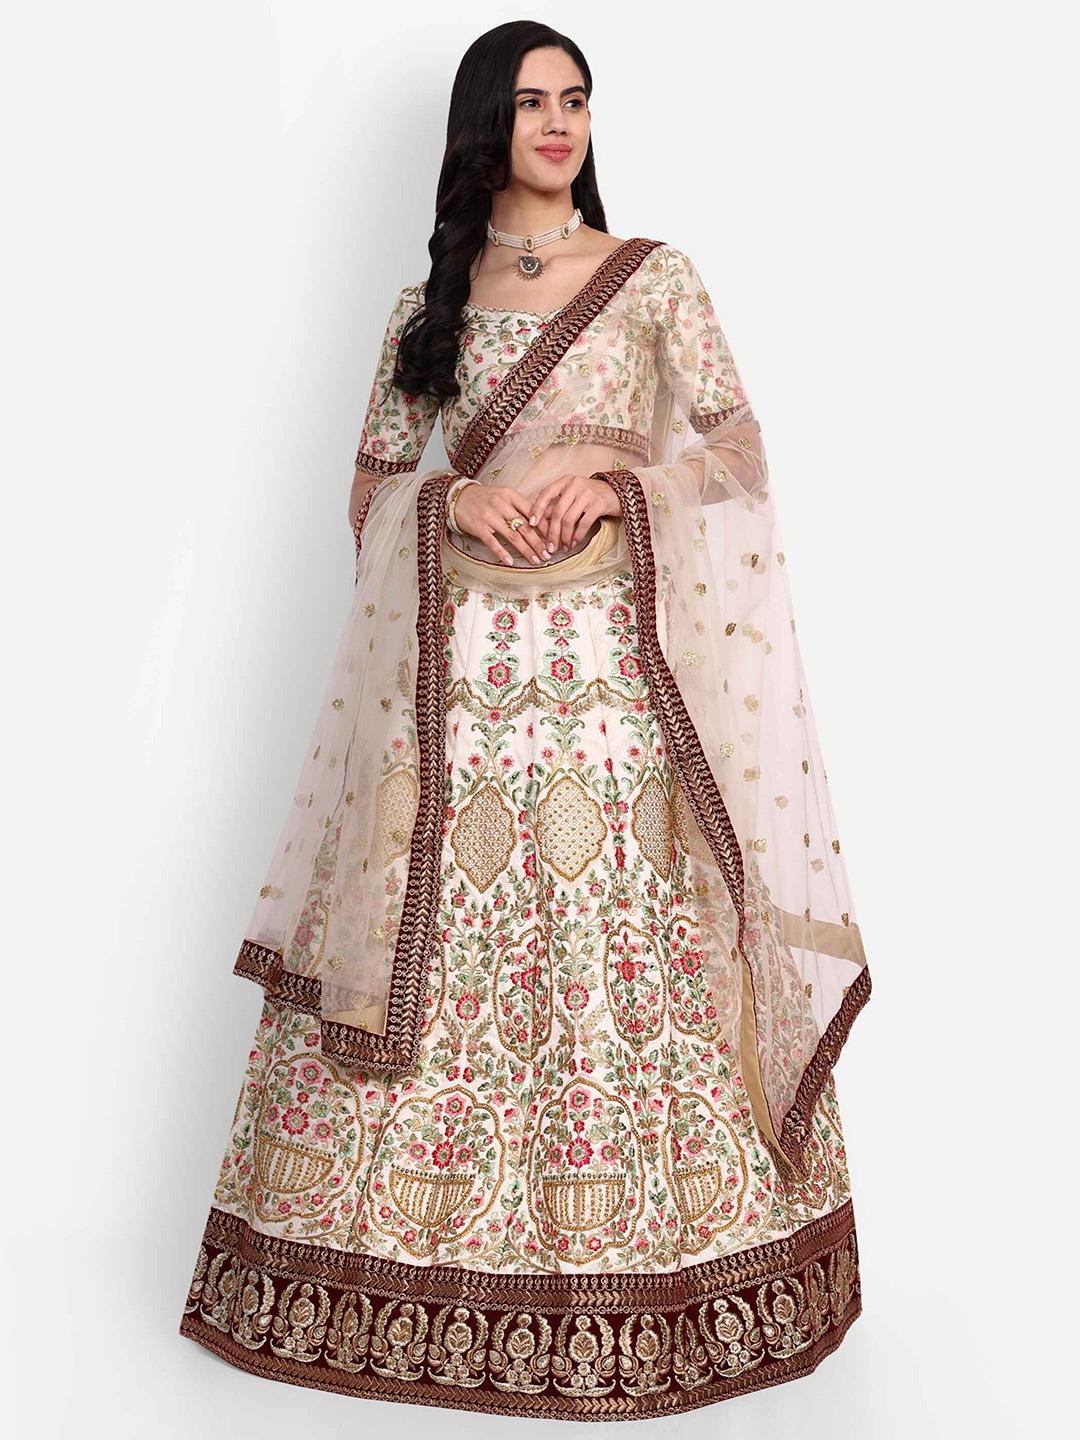 zeel clothing embroidered beads and stones kalamkari semi-stitched lehenga & unstitched blouse with dupatta